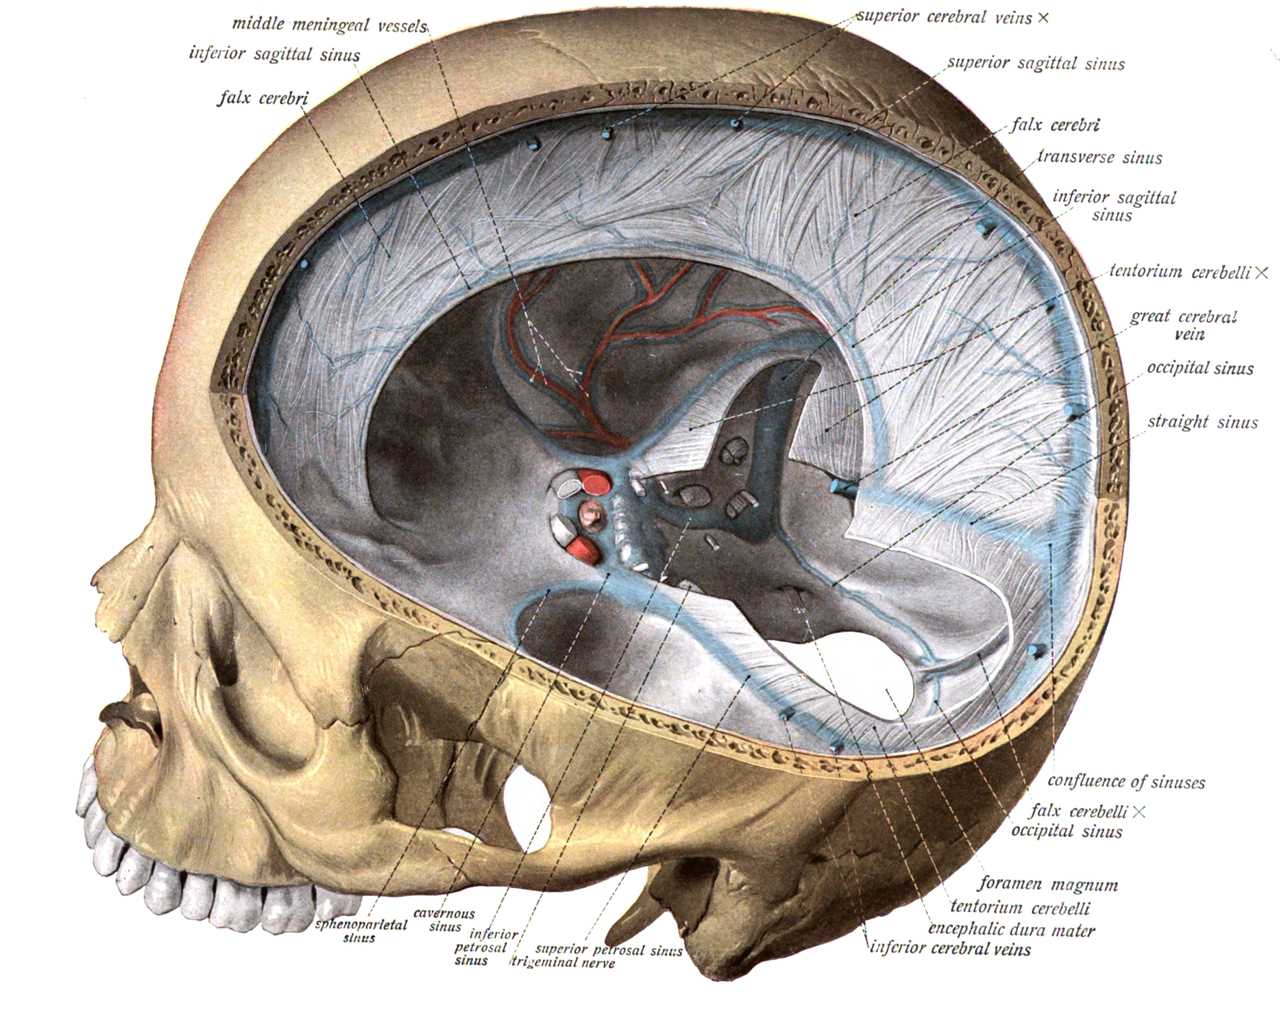 The dura mater extends into the skull cavity as the falx cerebri and tentorium cerebelli etc.